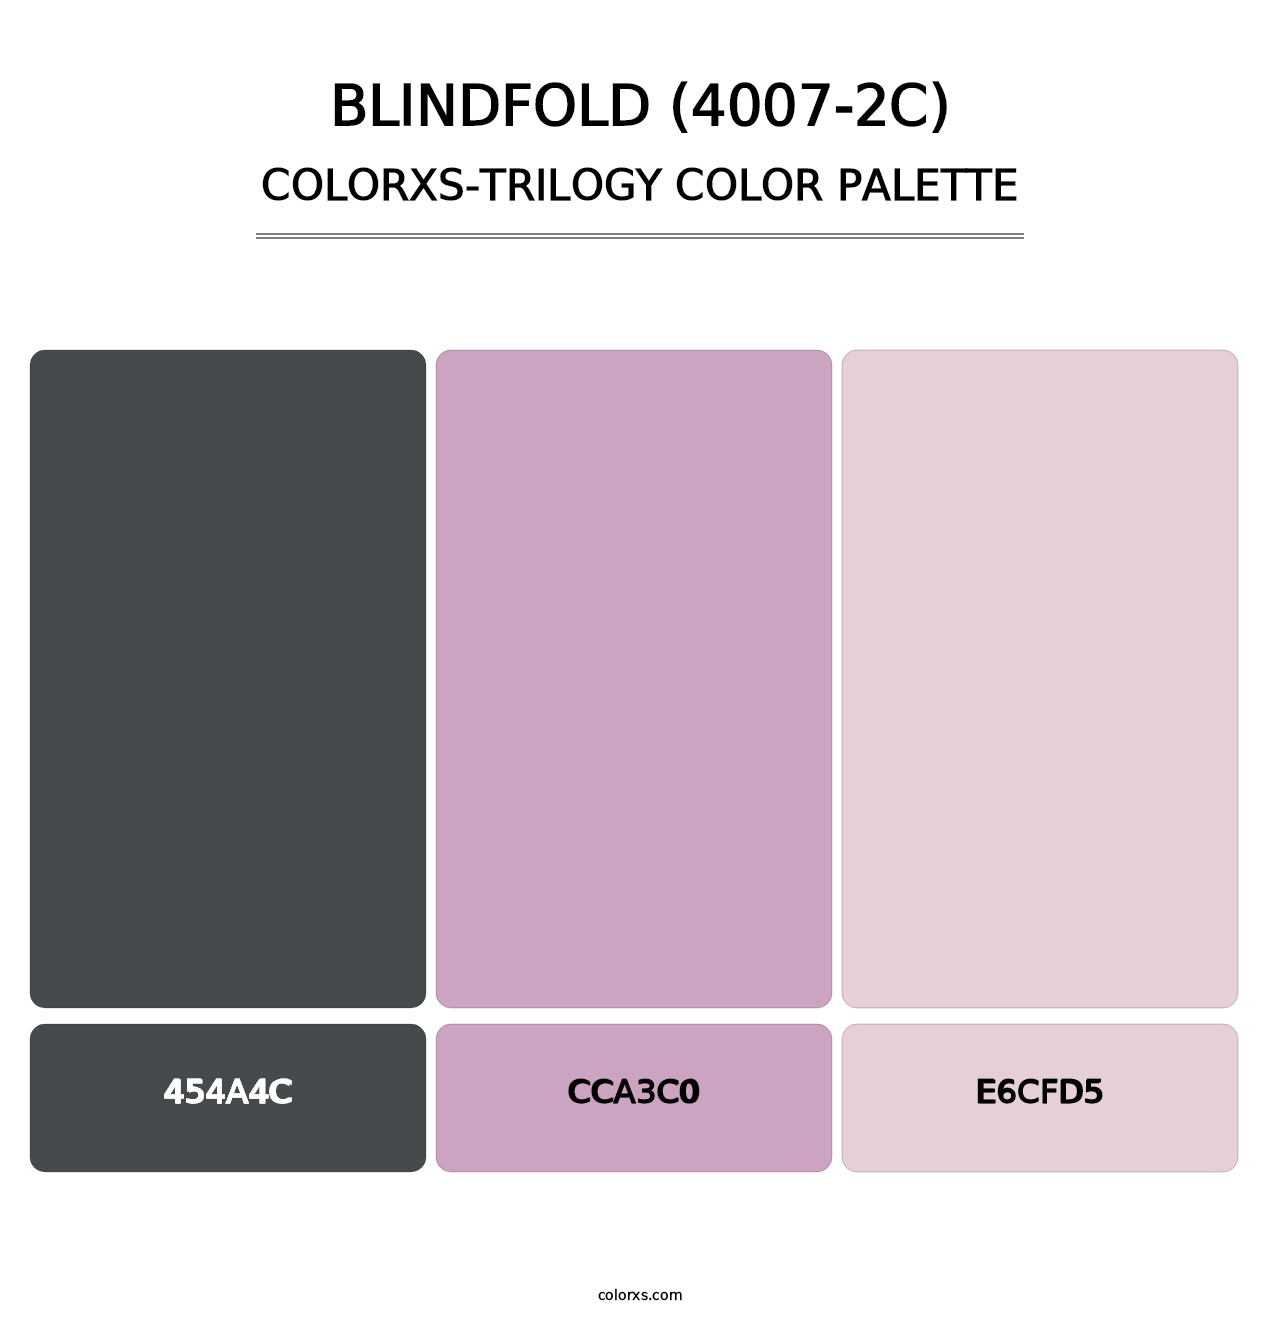 Blindfold (4007-2C) - Colorxs Trilogy Palette